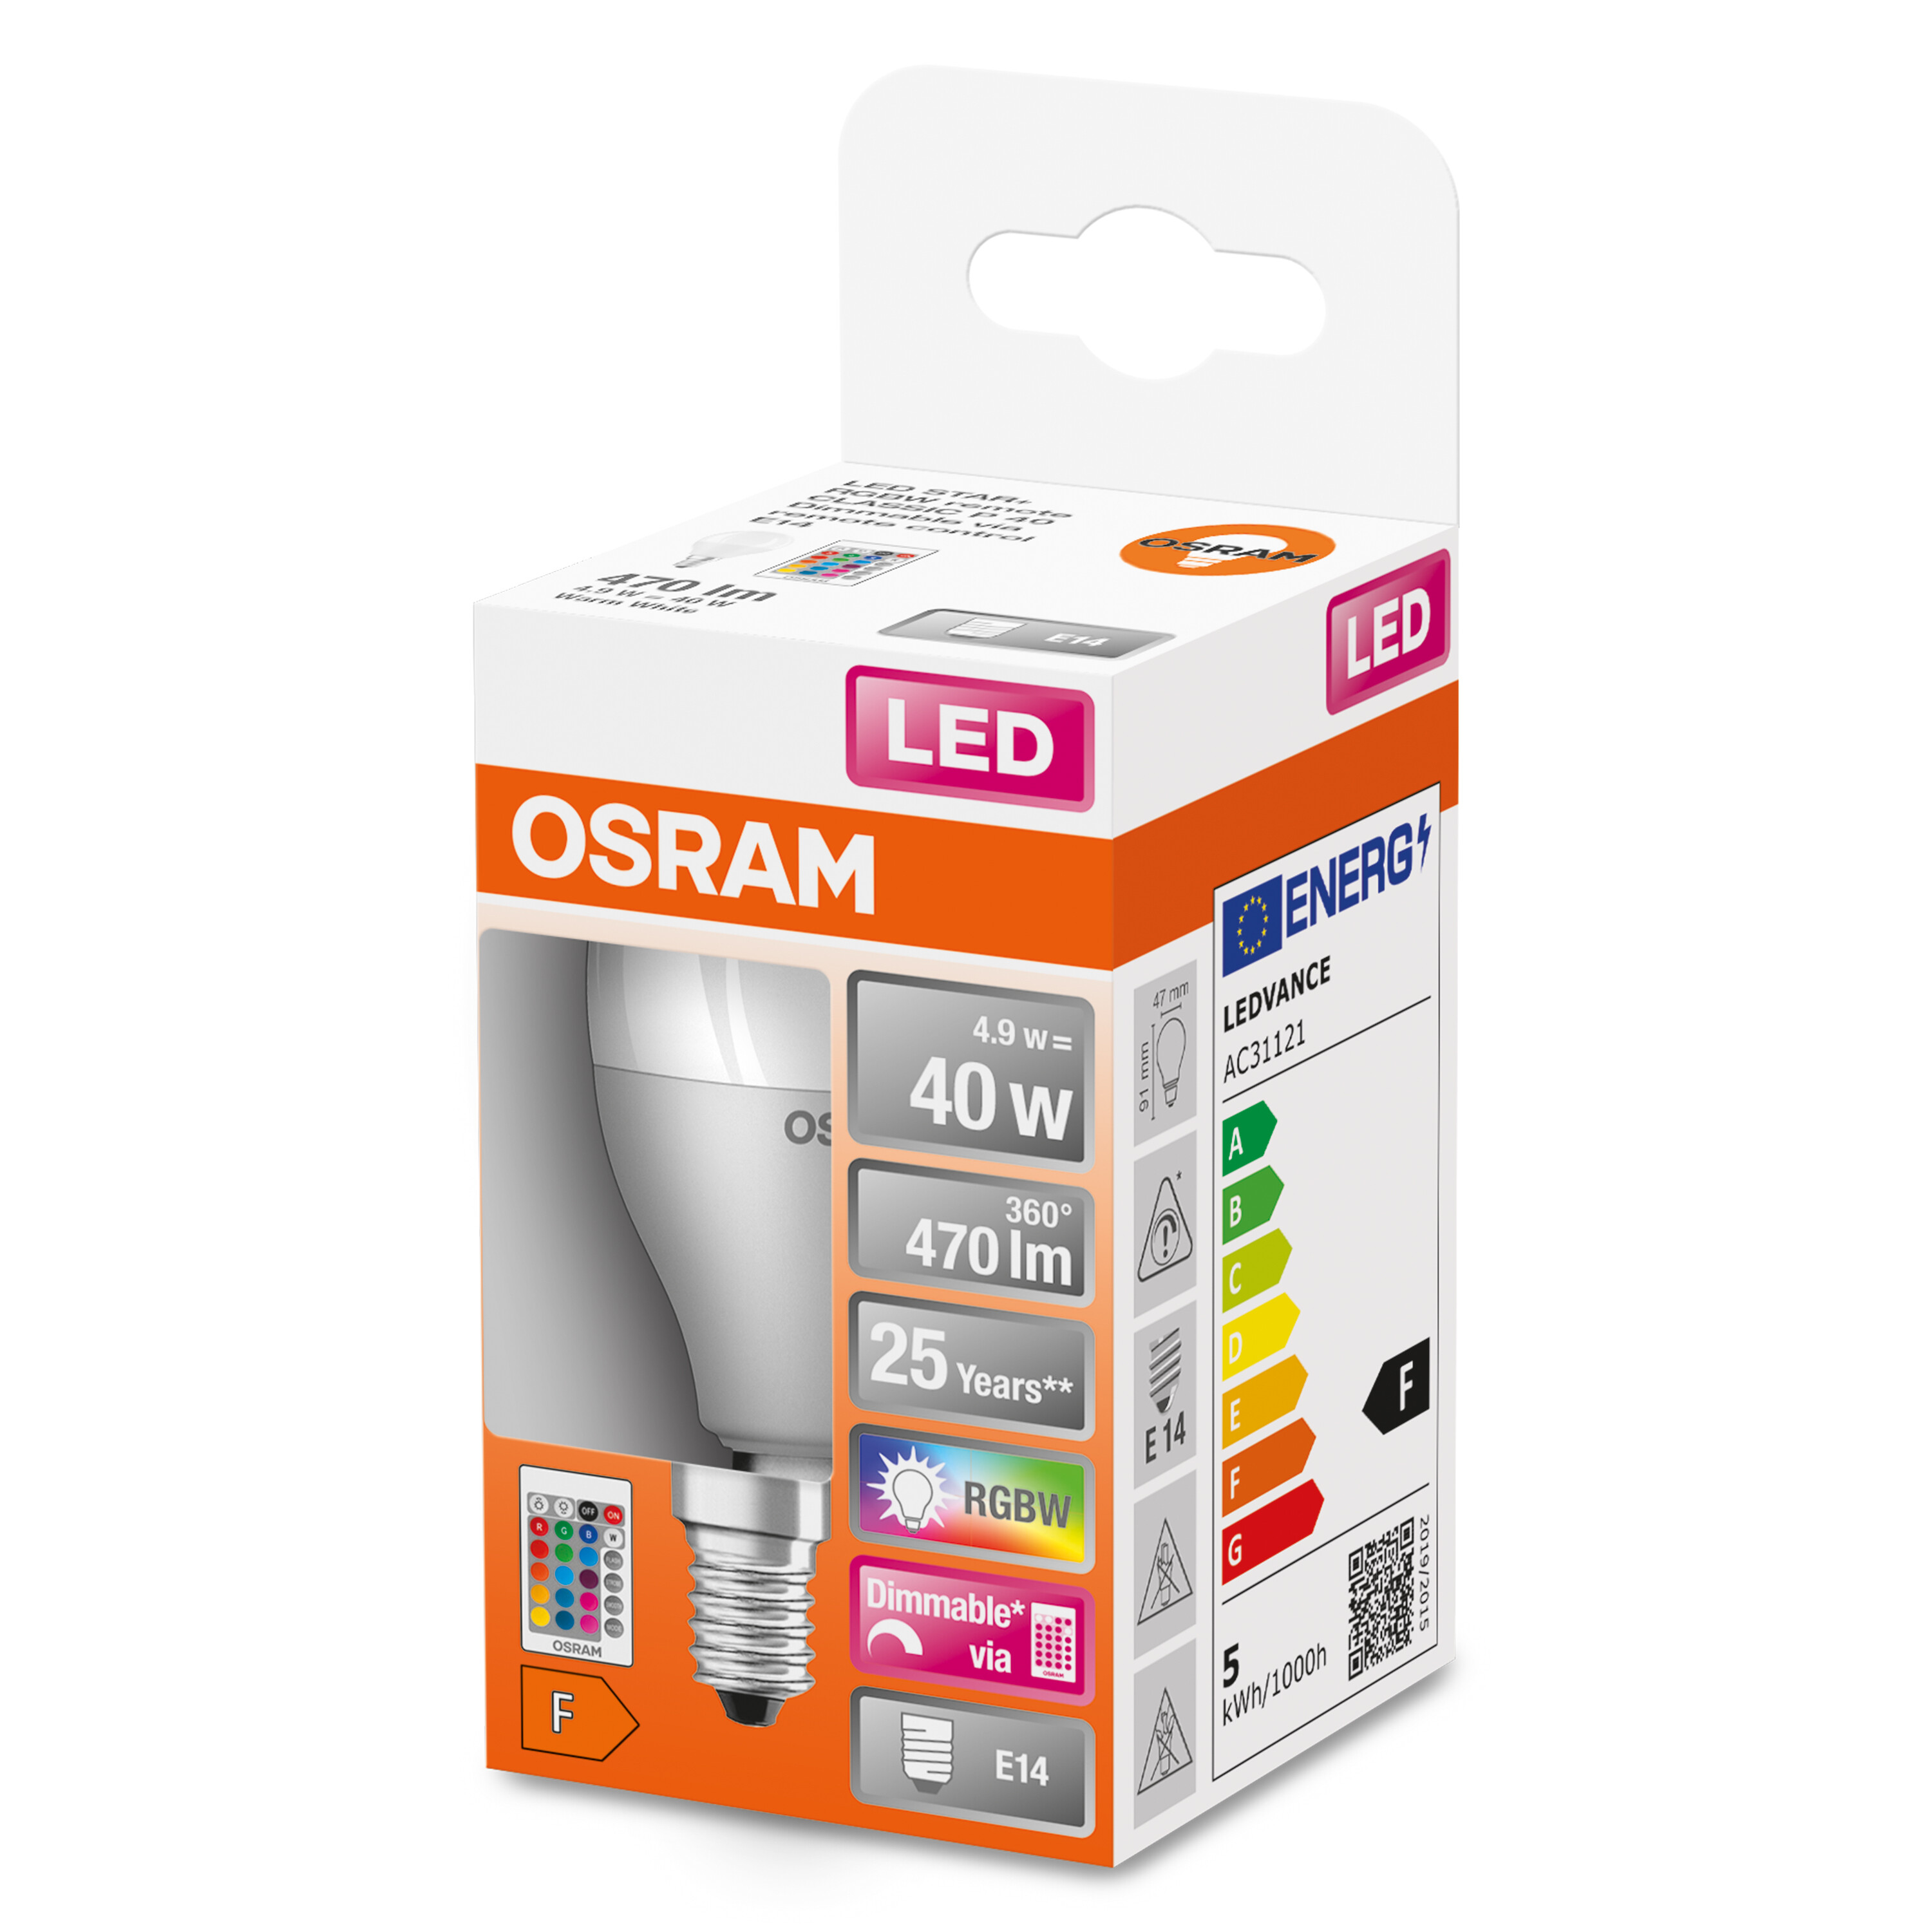 LED LED control RGBW OSRAM  with Warmweiß Lampe remote Retrofit lamps